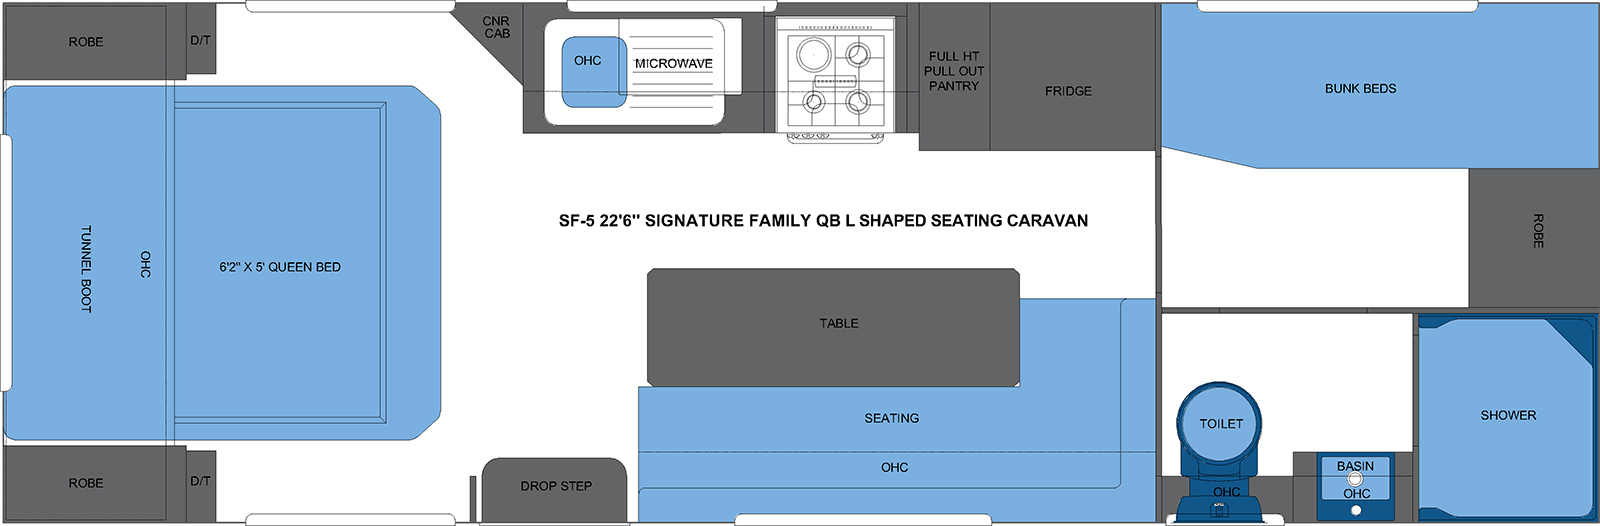 SF-5 22'6 SIGNATURE FAMILY QB L SHAPED SEATING CARAVAN